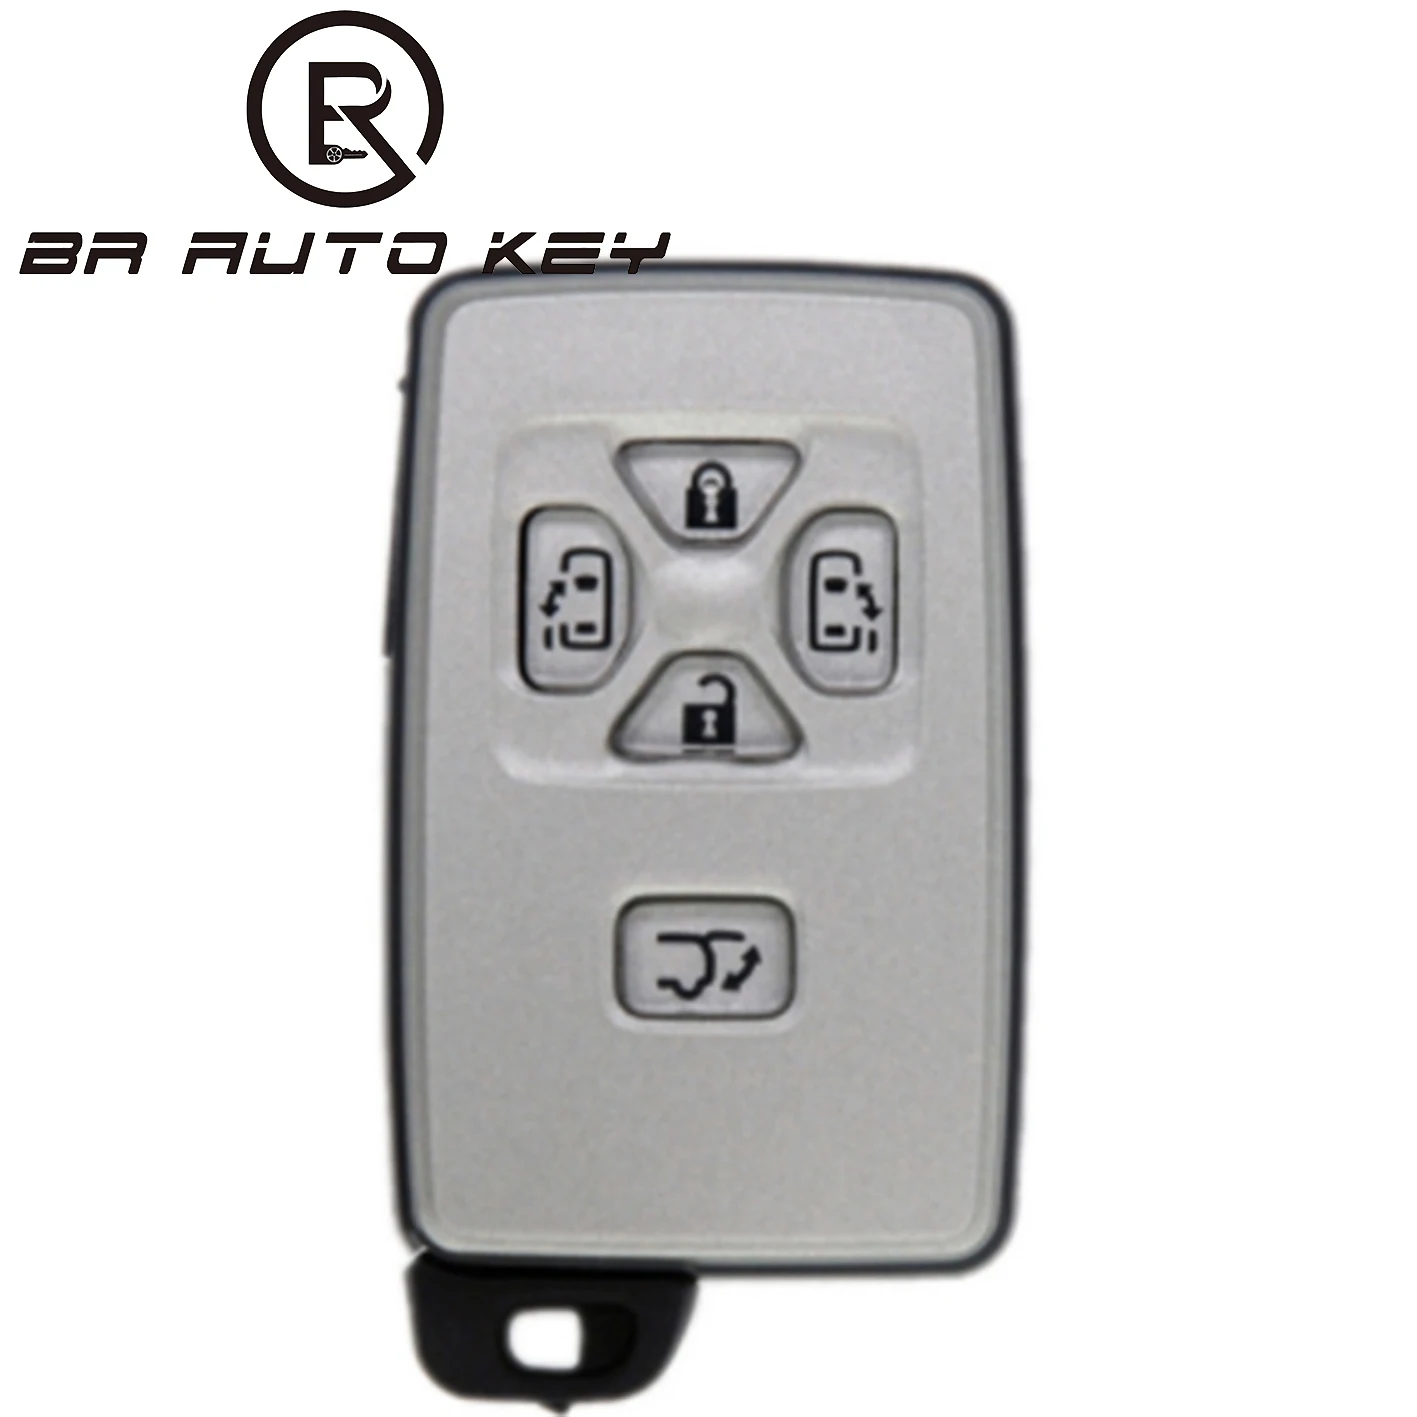 5Buttons Smart Remote car key For for Toyota ALPHARD VELLFIRE PREVIA VOXY NOAH 2009-2014 Board NO:271451-6221 312mhz fsk